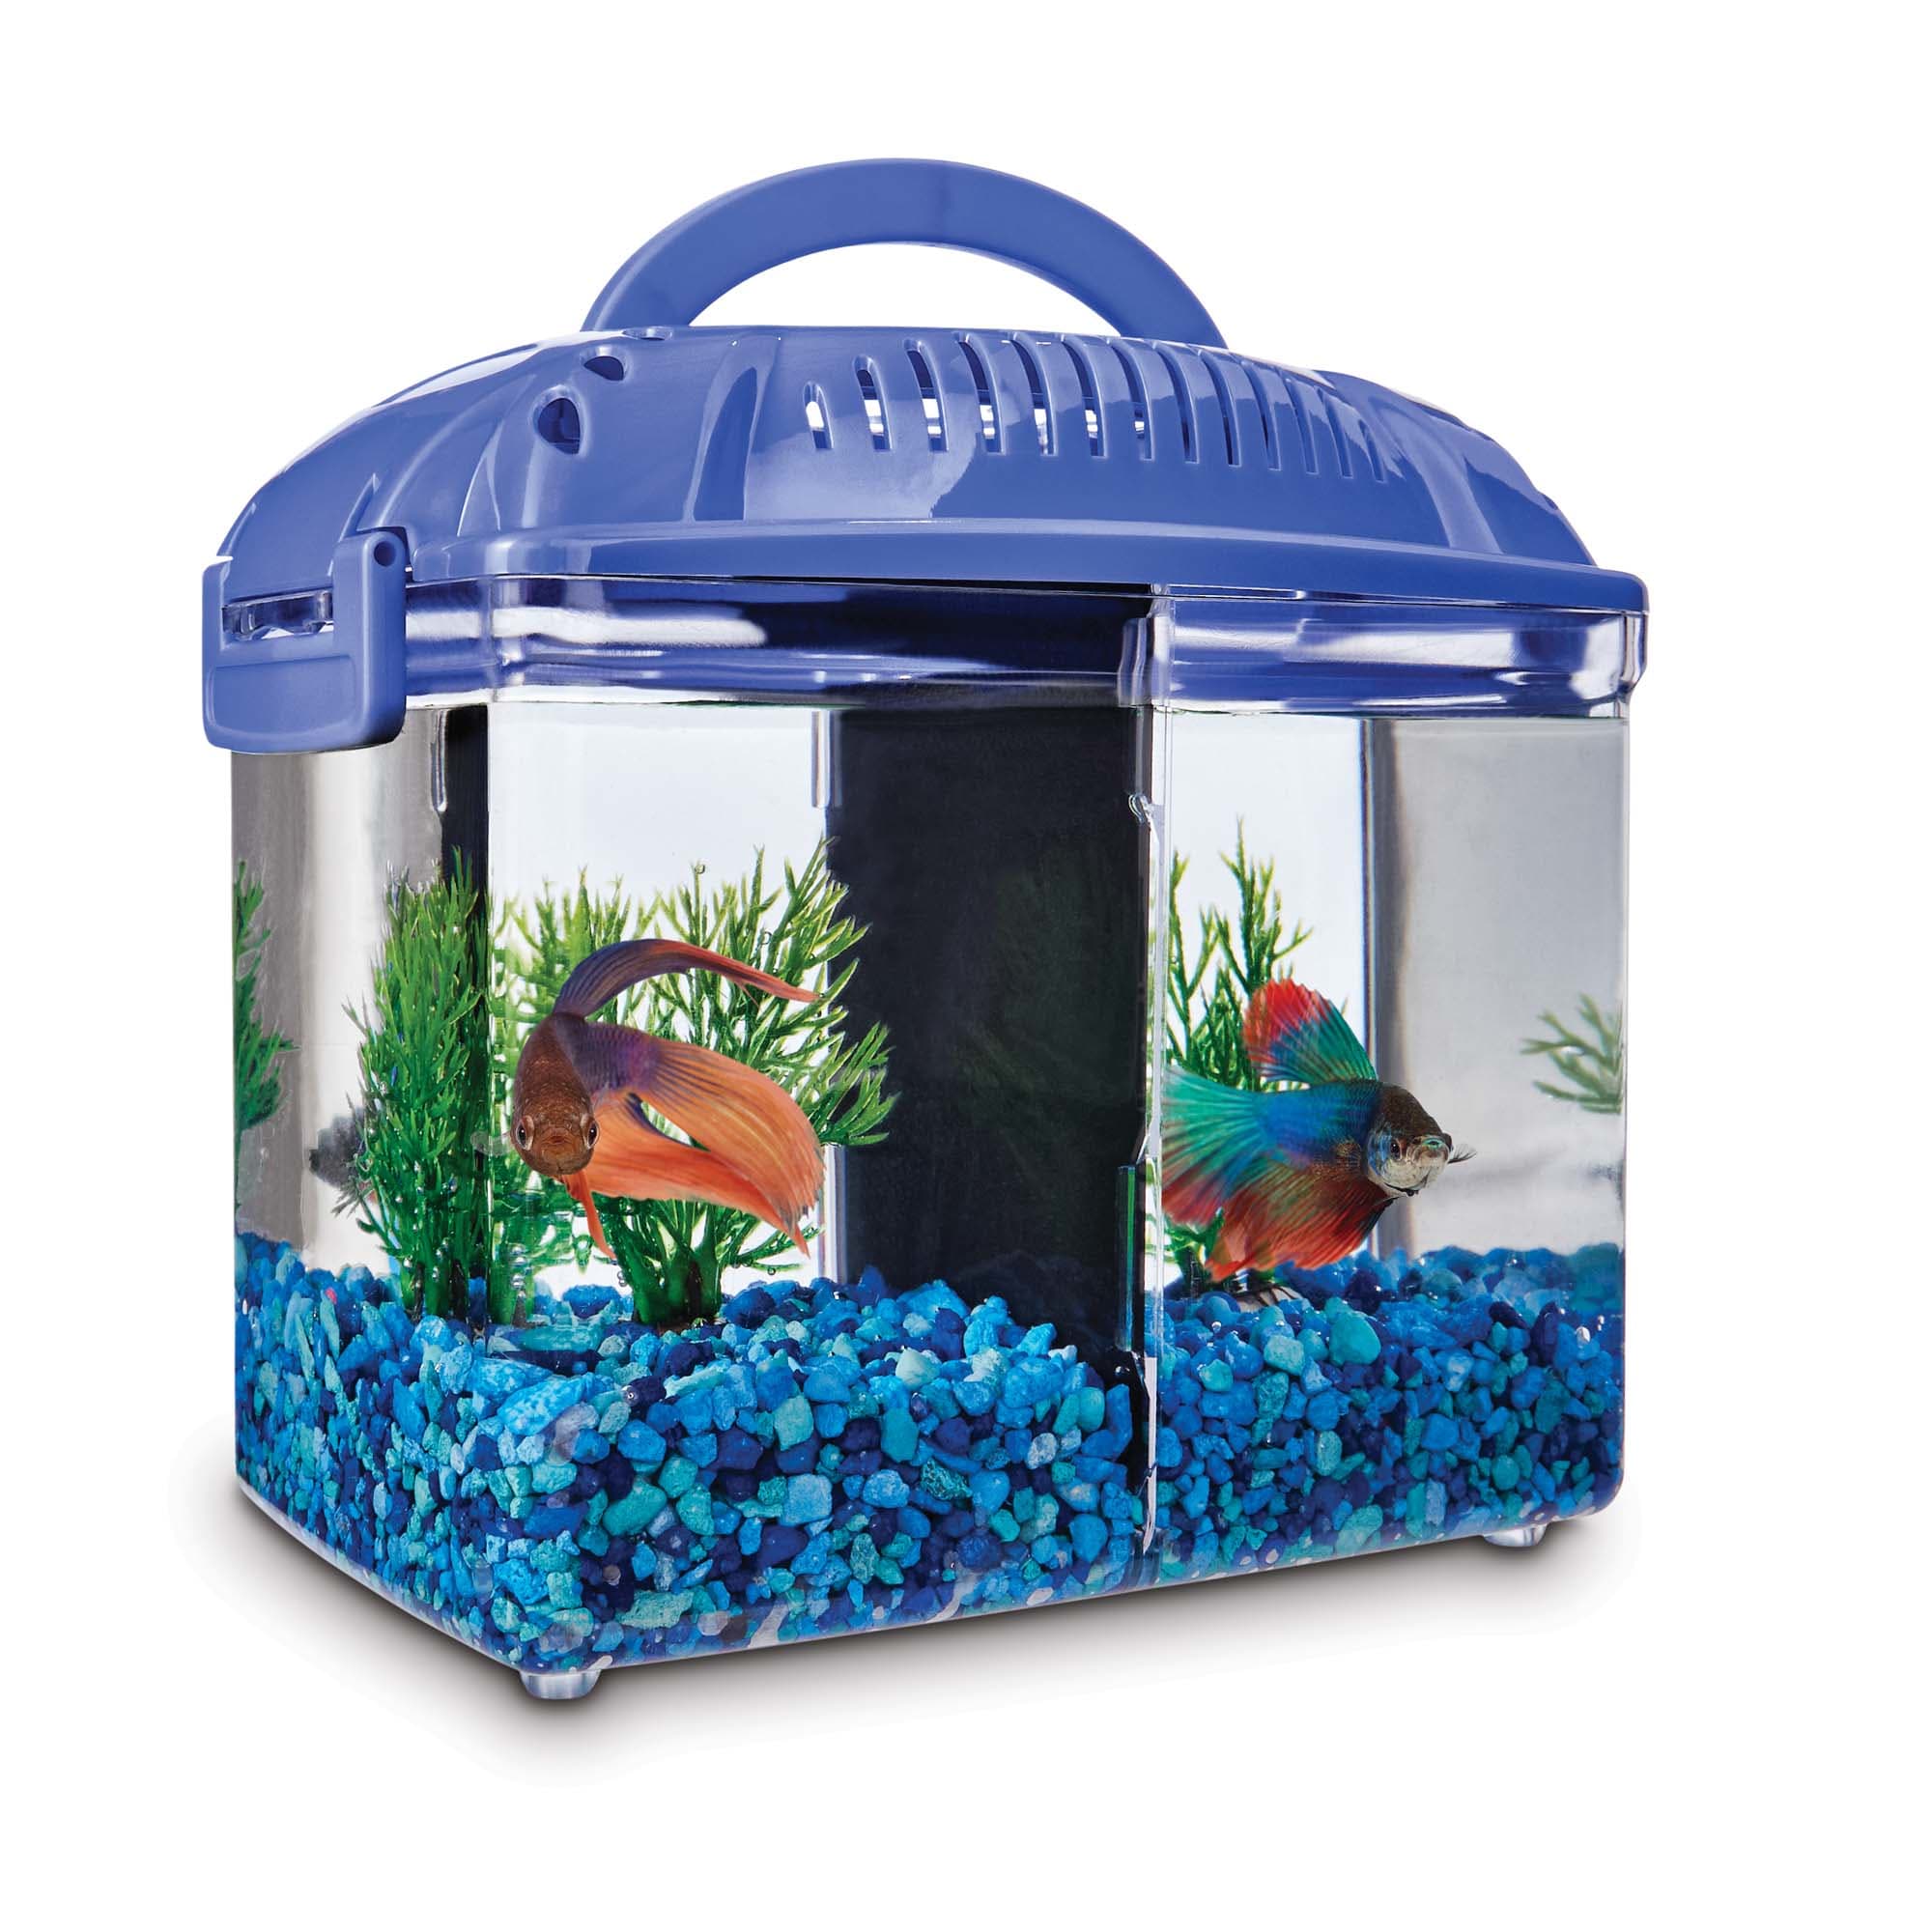 Imagitarium Betta Fish Dual Habitat Tank In Blue 0 8 Gal Petco